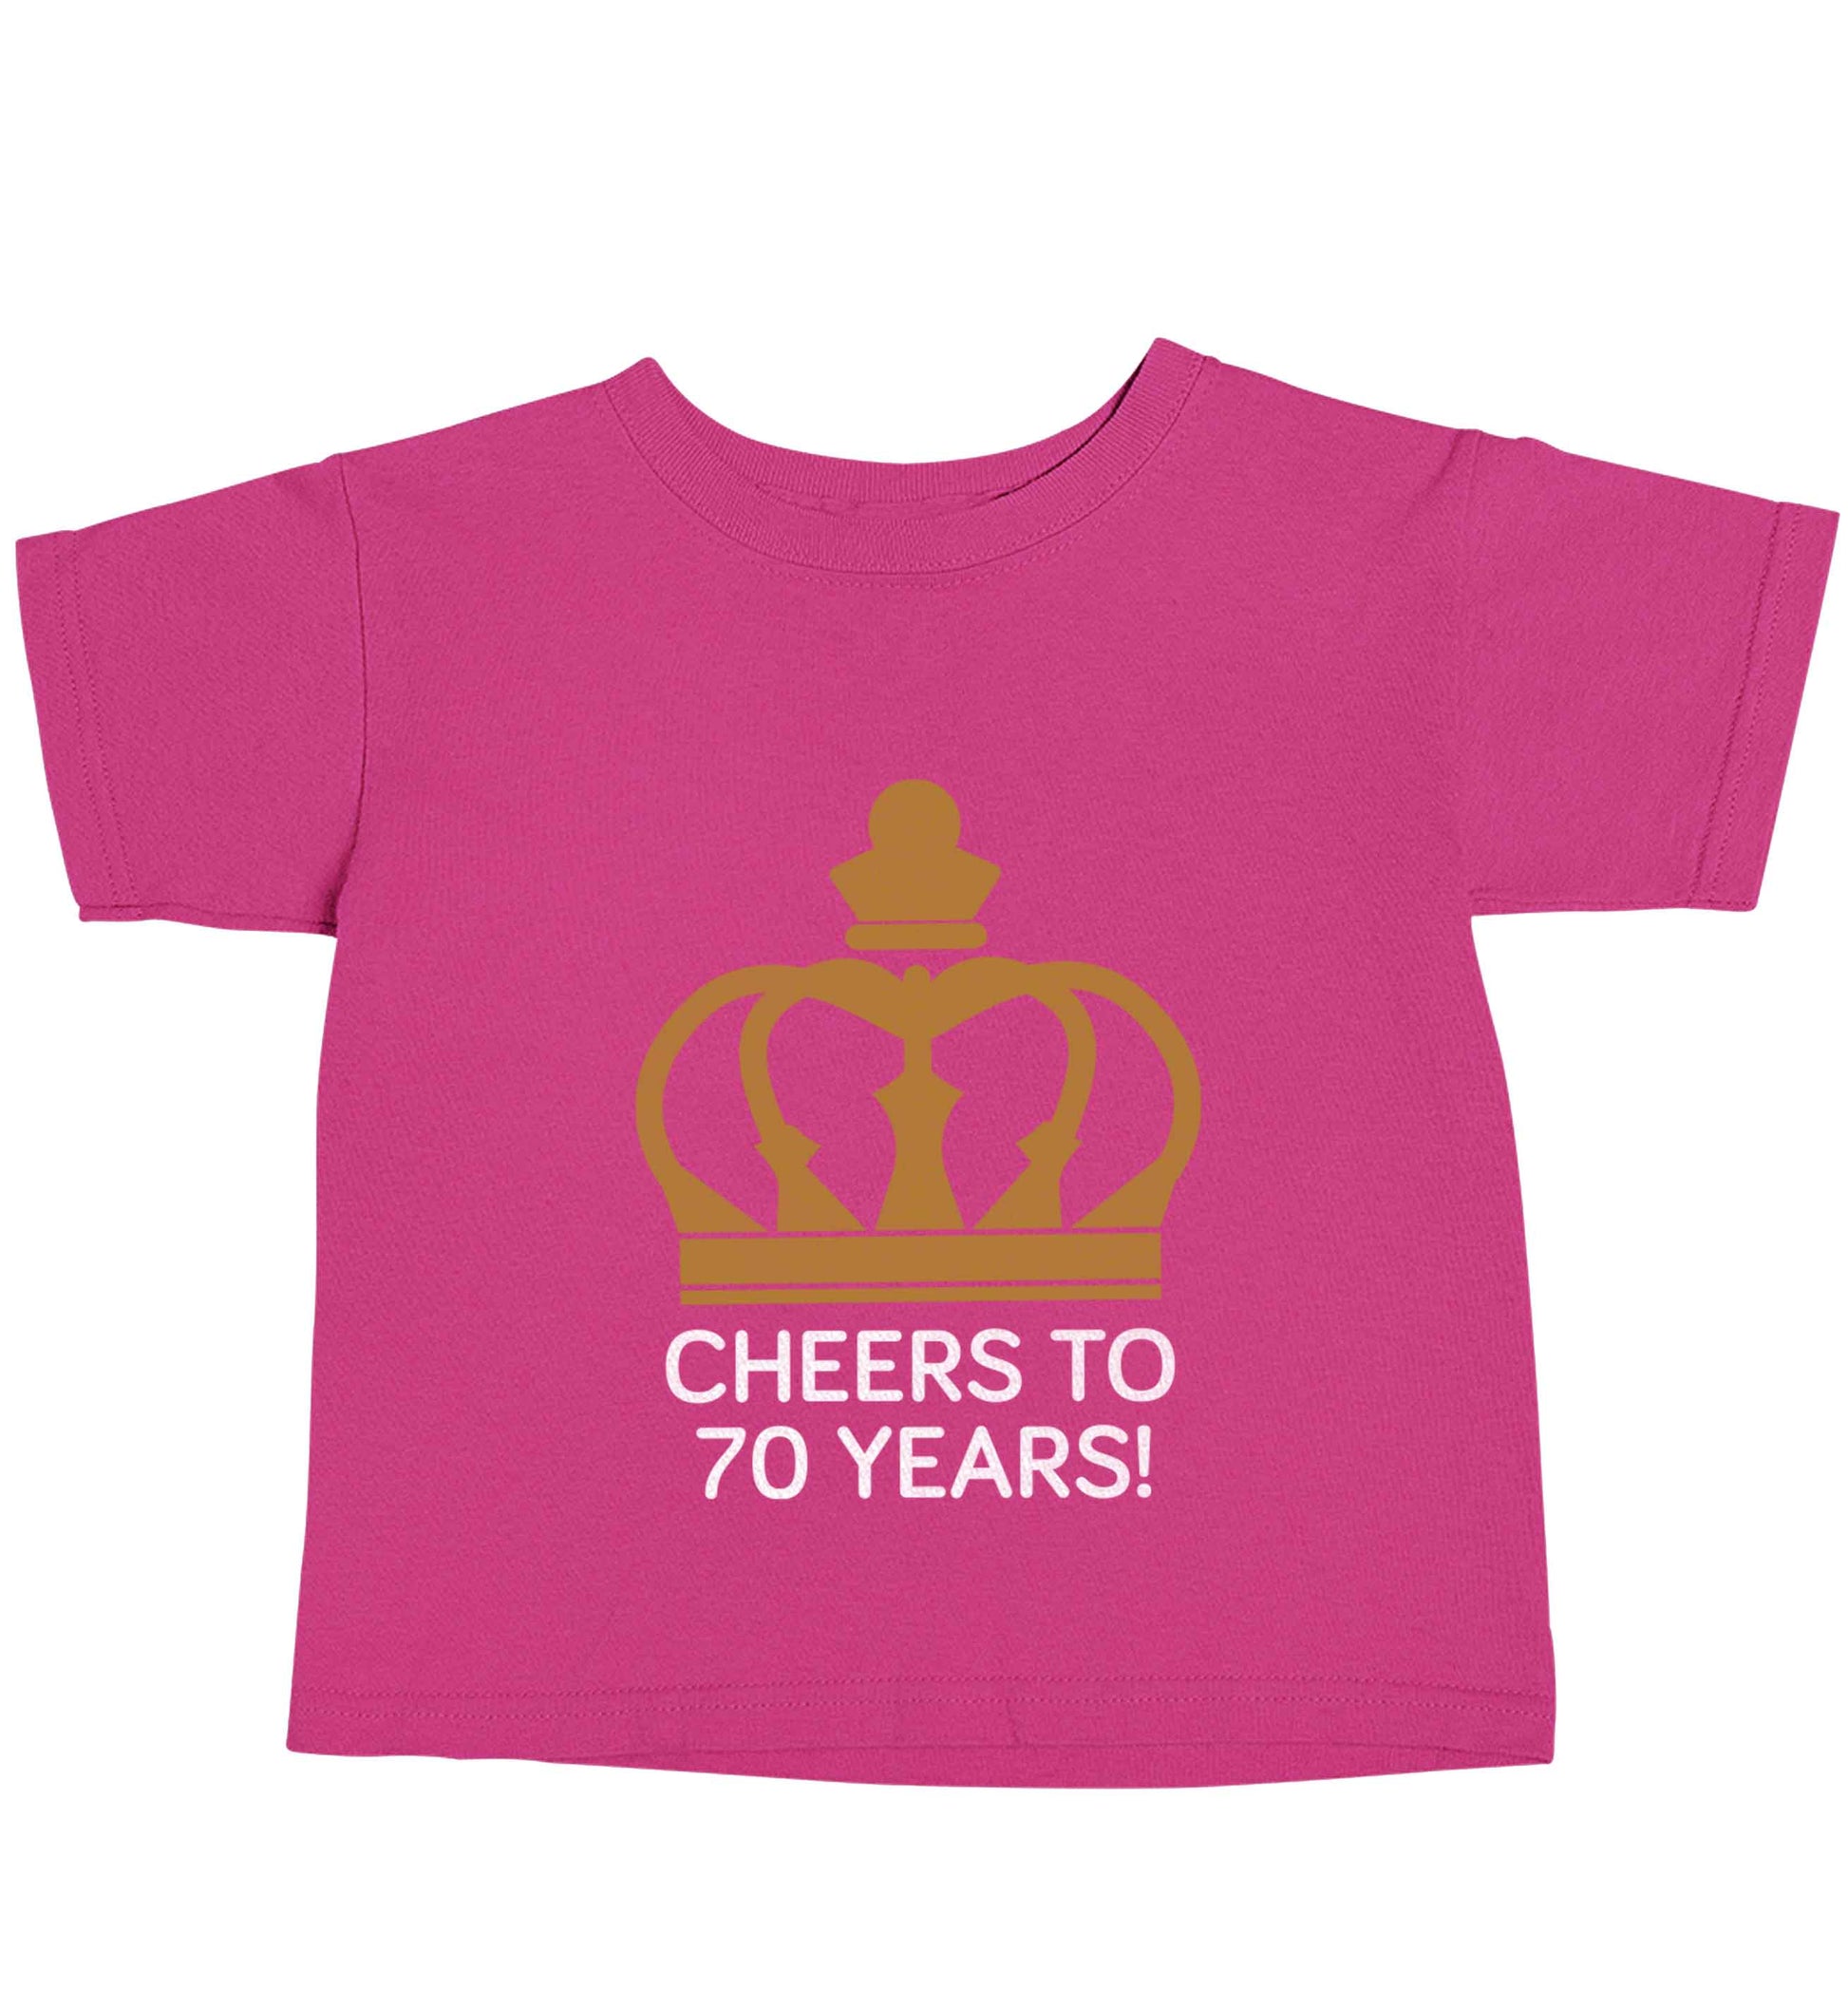 Cheers to 70 years! pink baby toddler Tshirt 2 Years